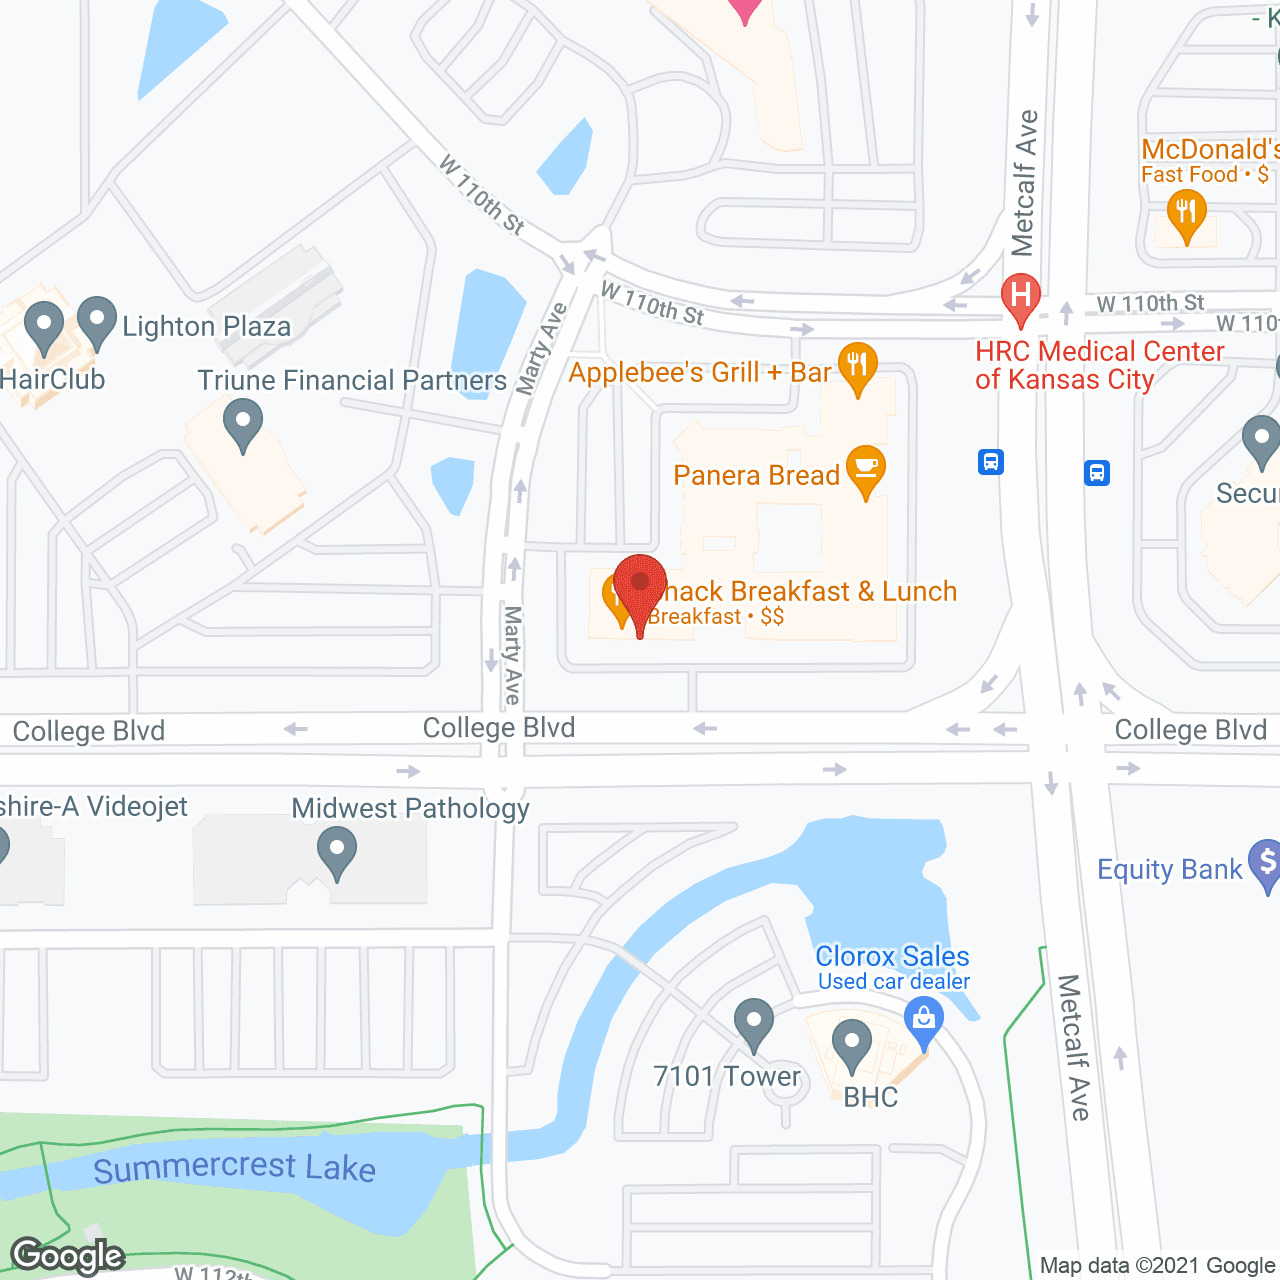 TheKey Kansas City in google map